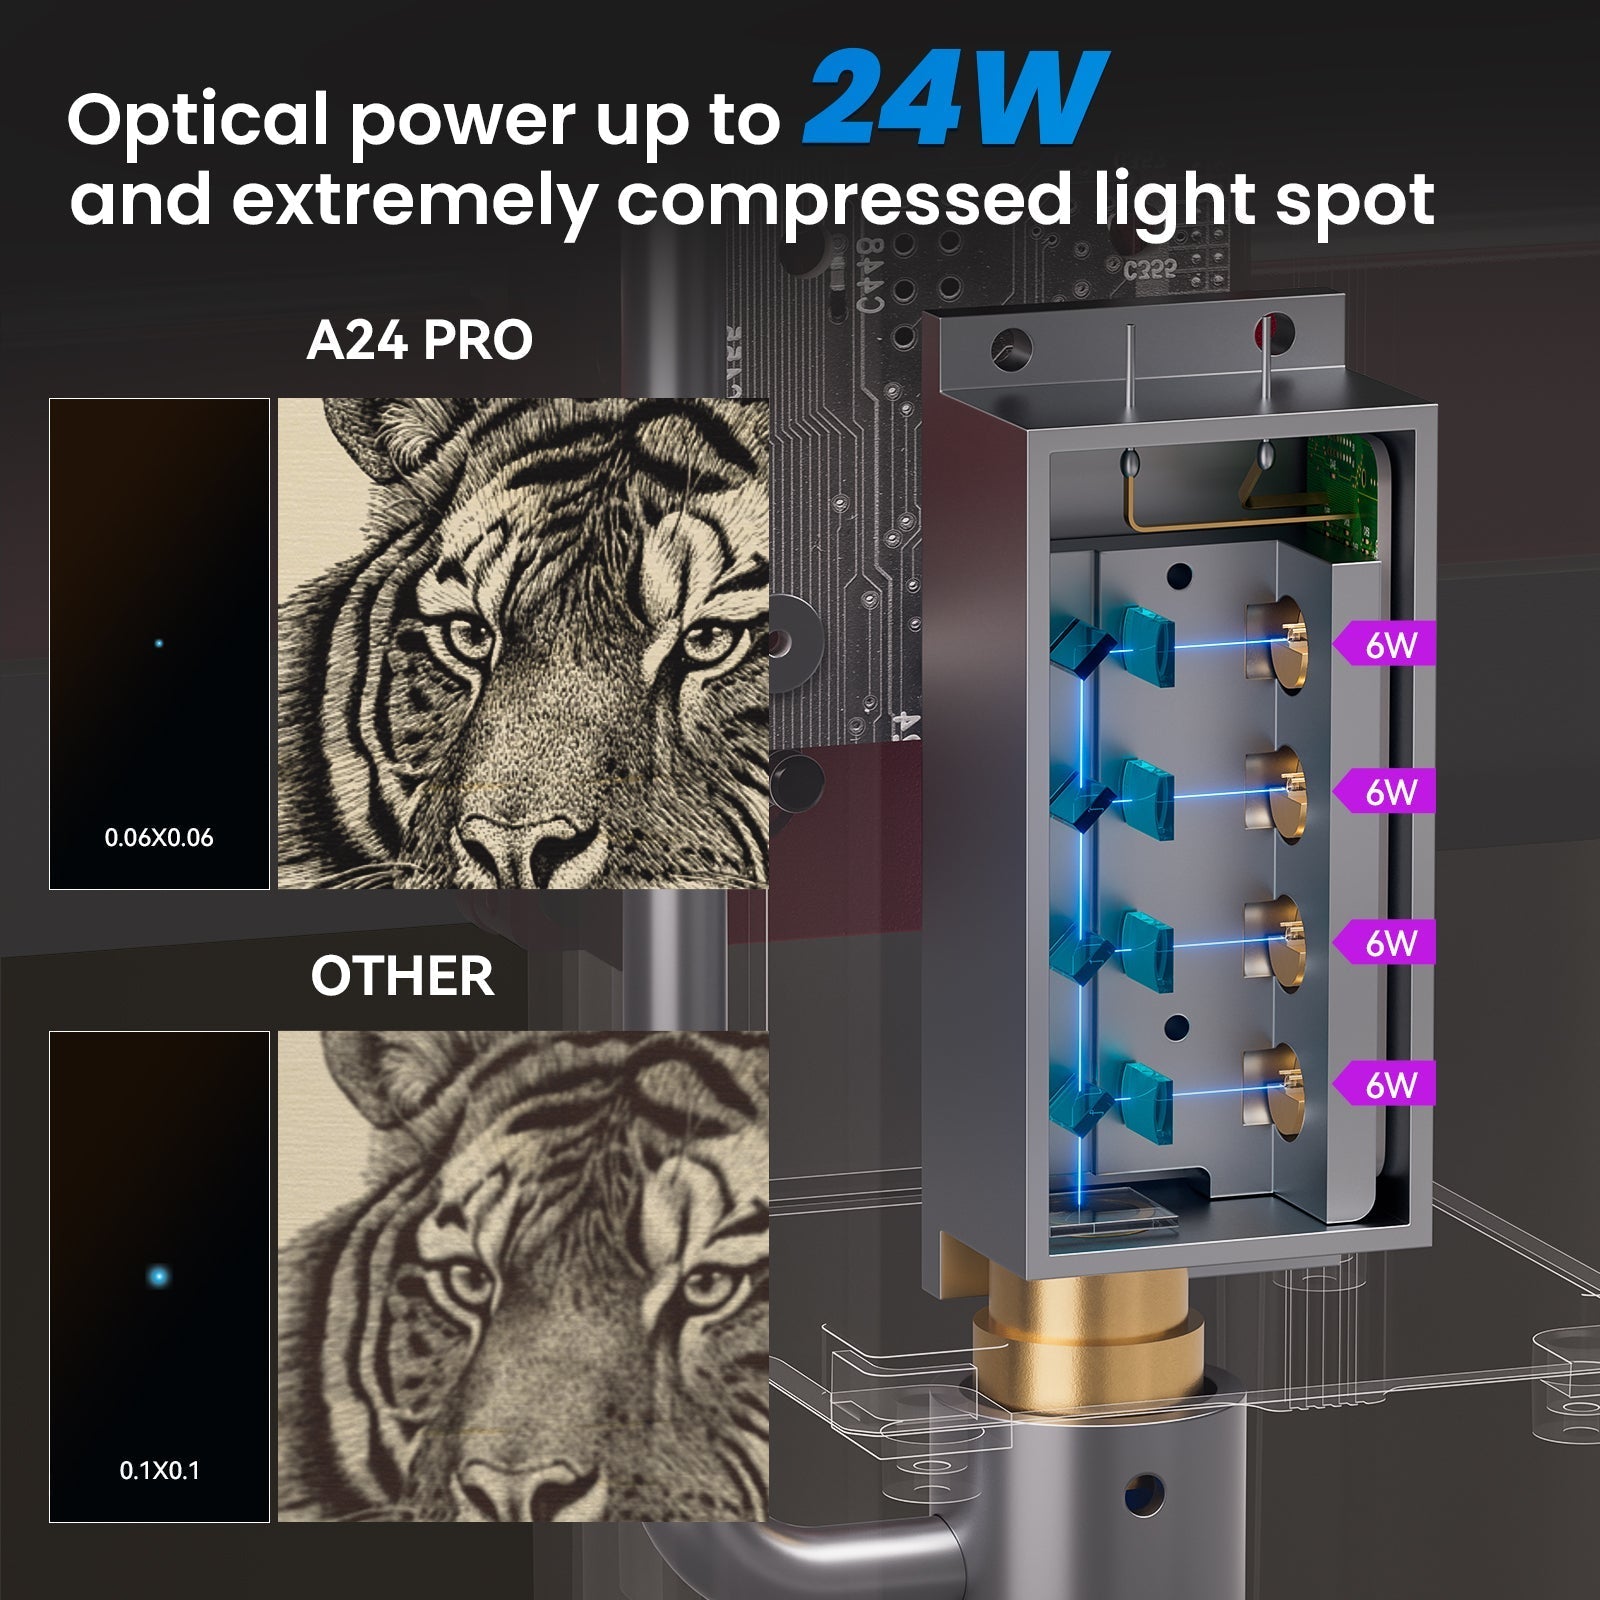 AtomStack A24 Ultra Optical Power 24W Unibody Frame Laser Engraver